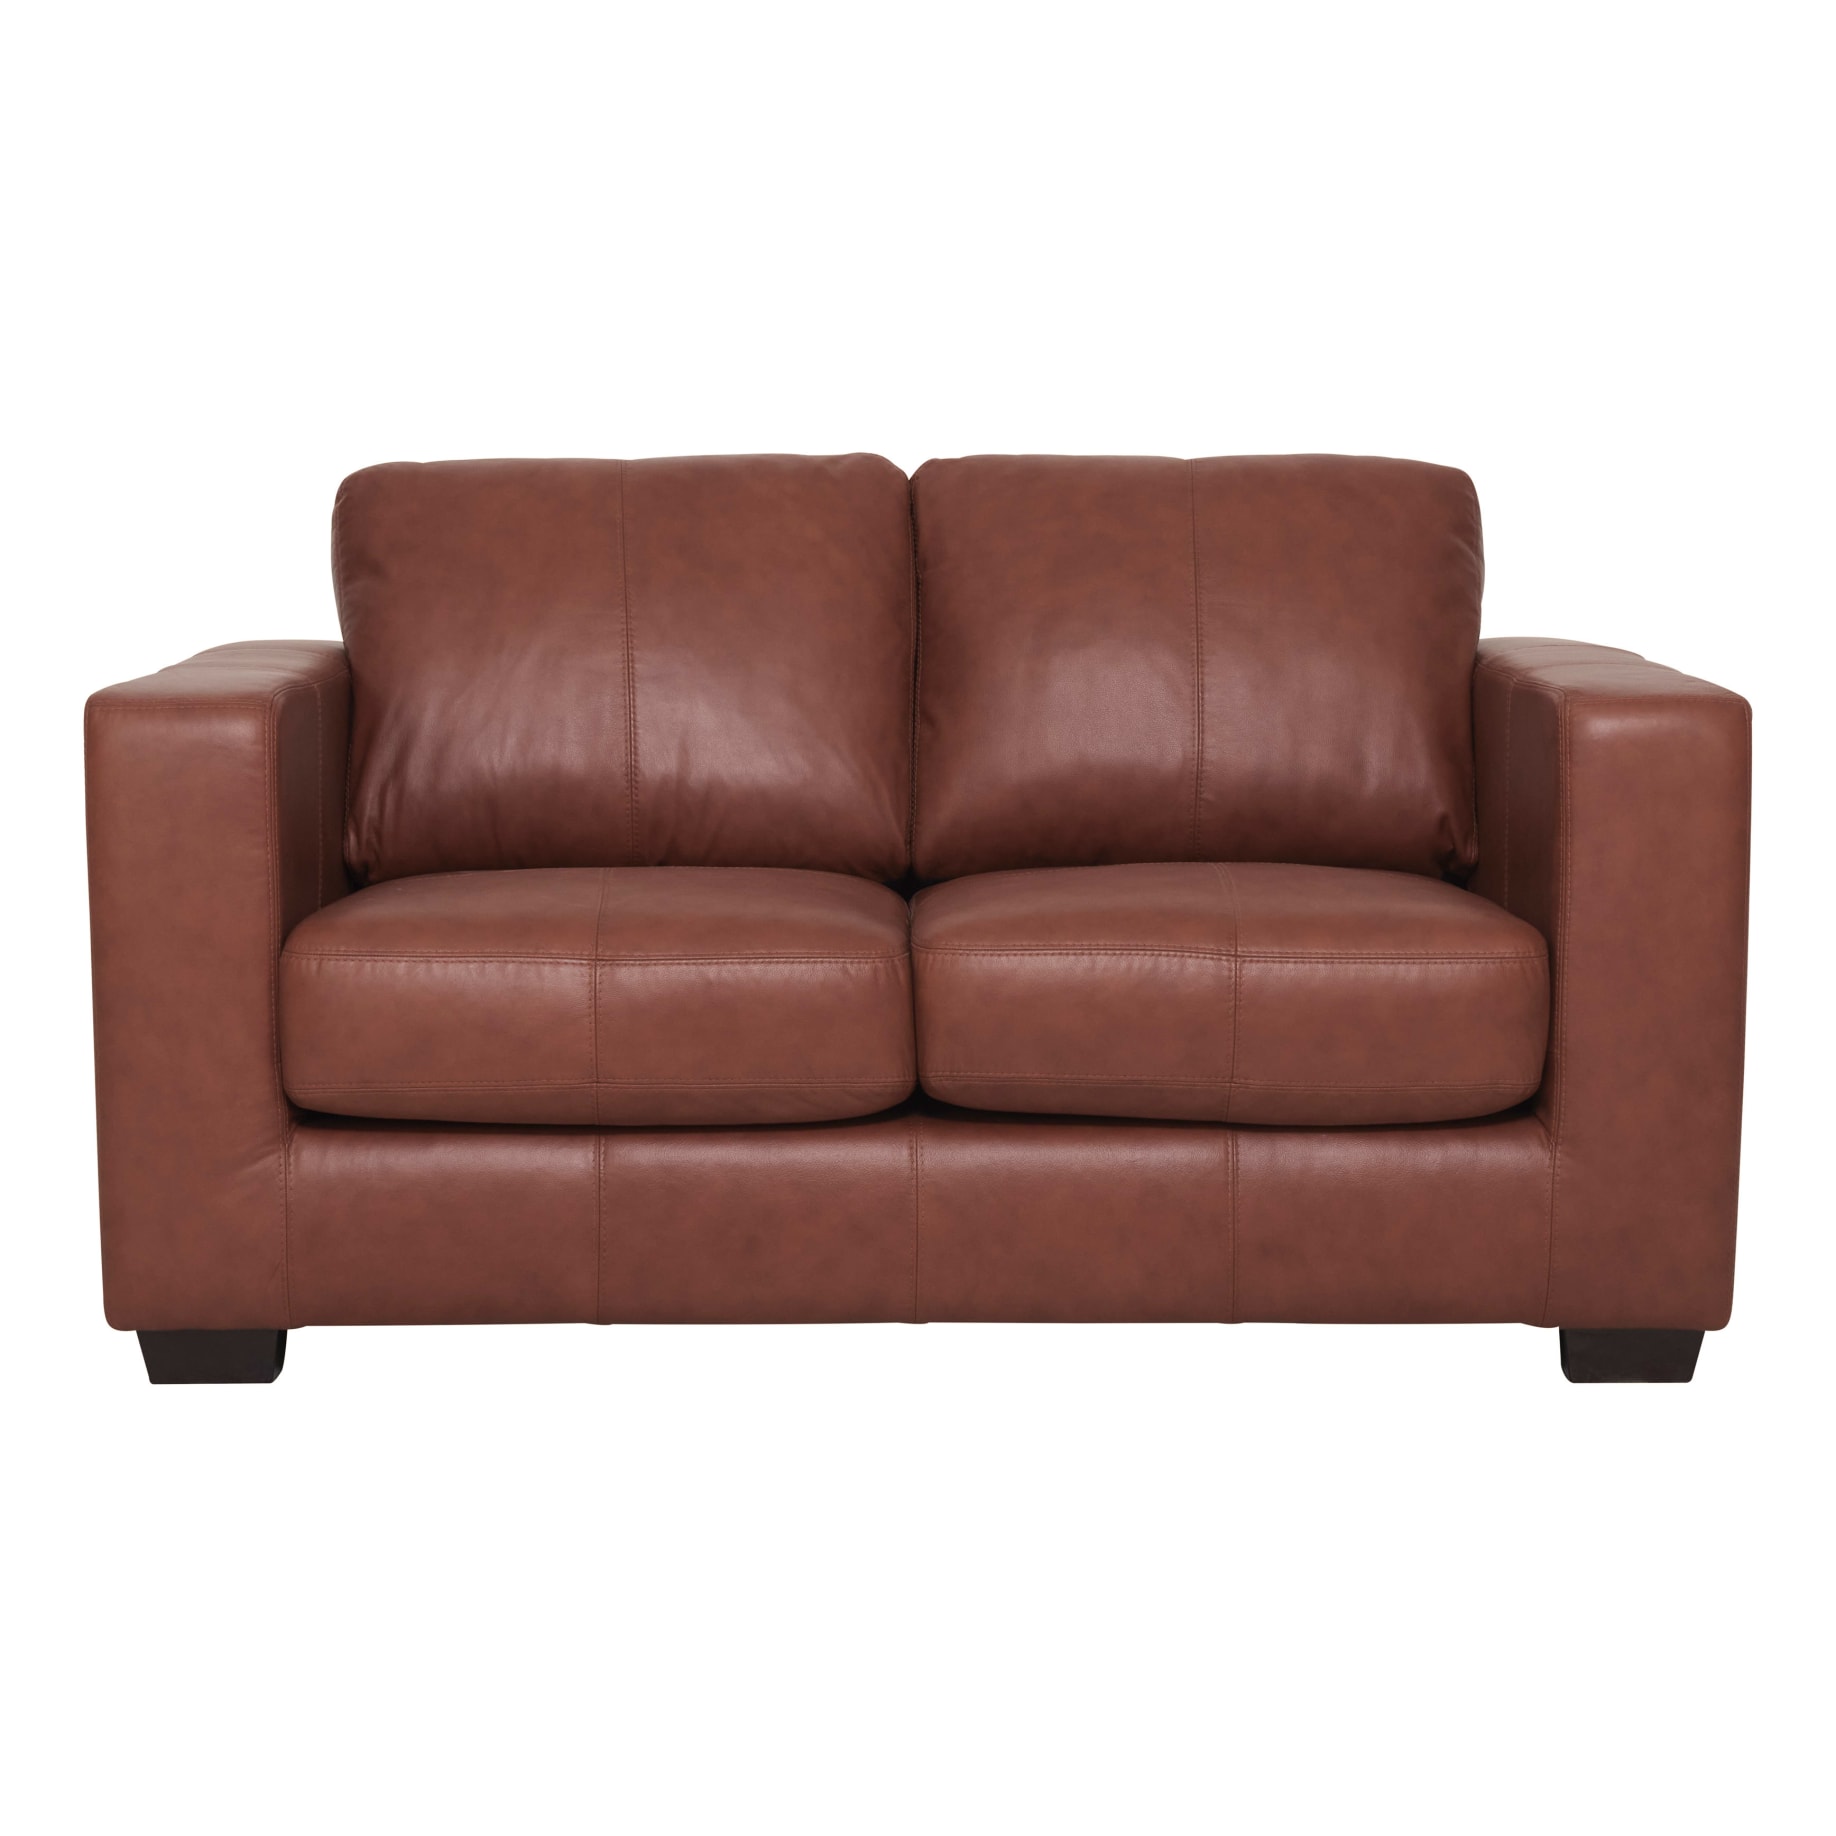 Gordon 2 Seater Sofa in Aniline Leather Cognac